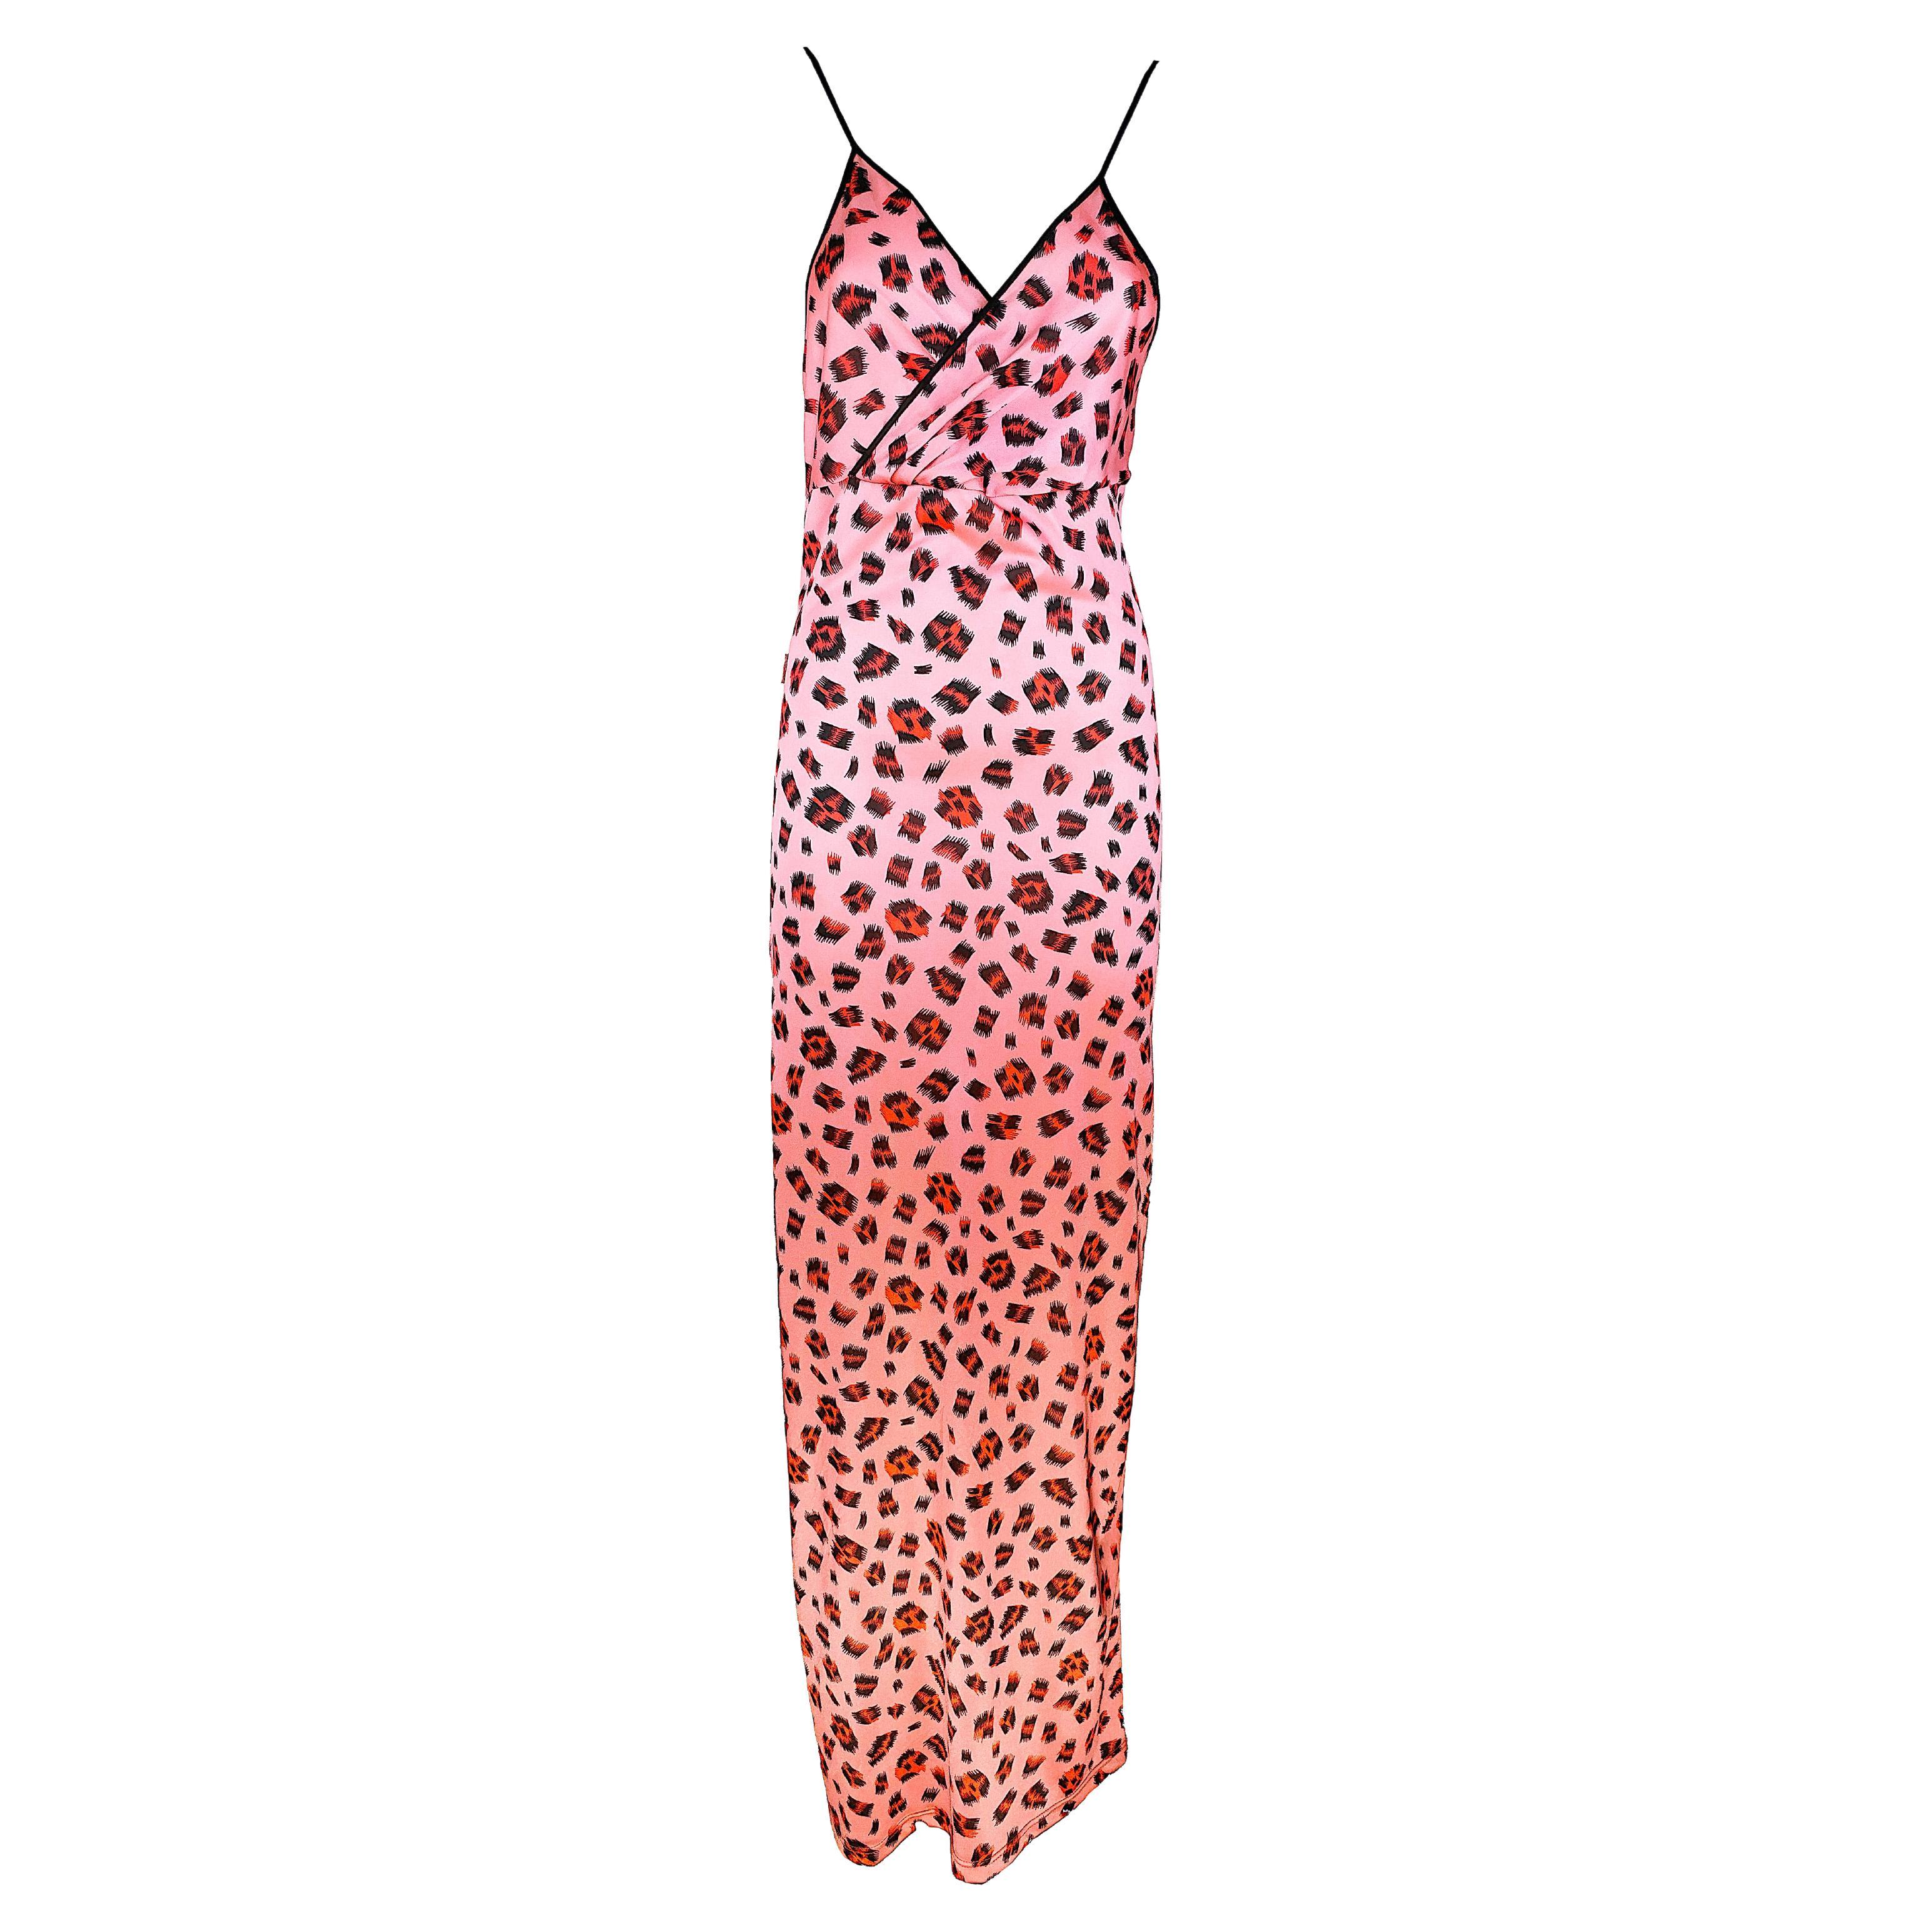 FIORUCCI – 80s Disco Vintage Pink Long Halter Dress with Leopard-Print  Size L